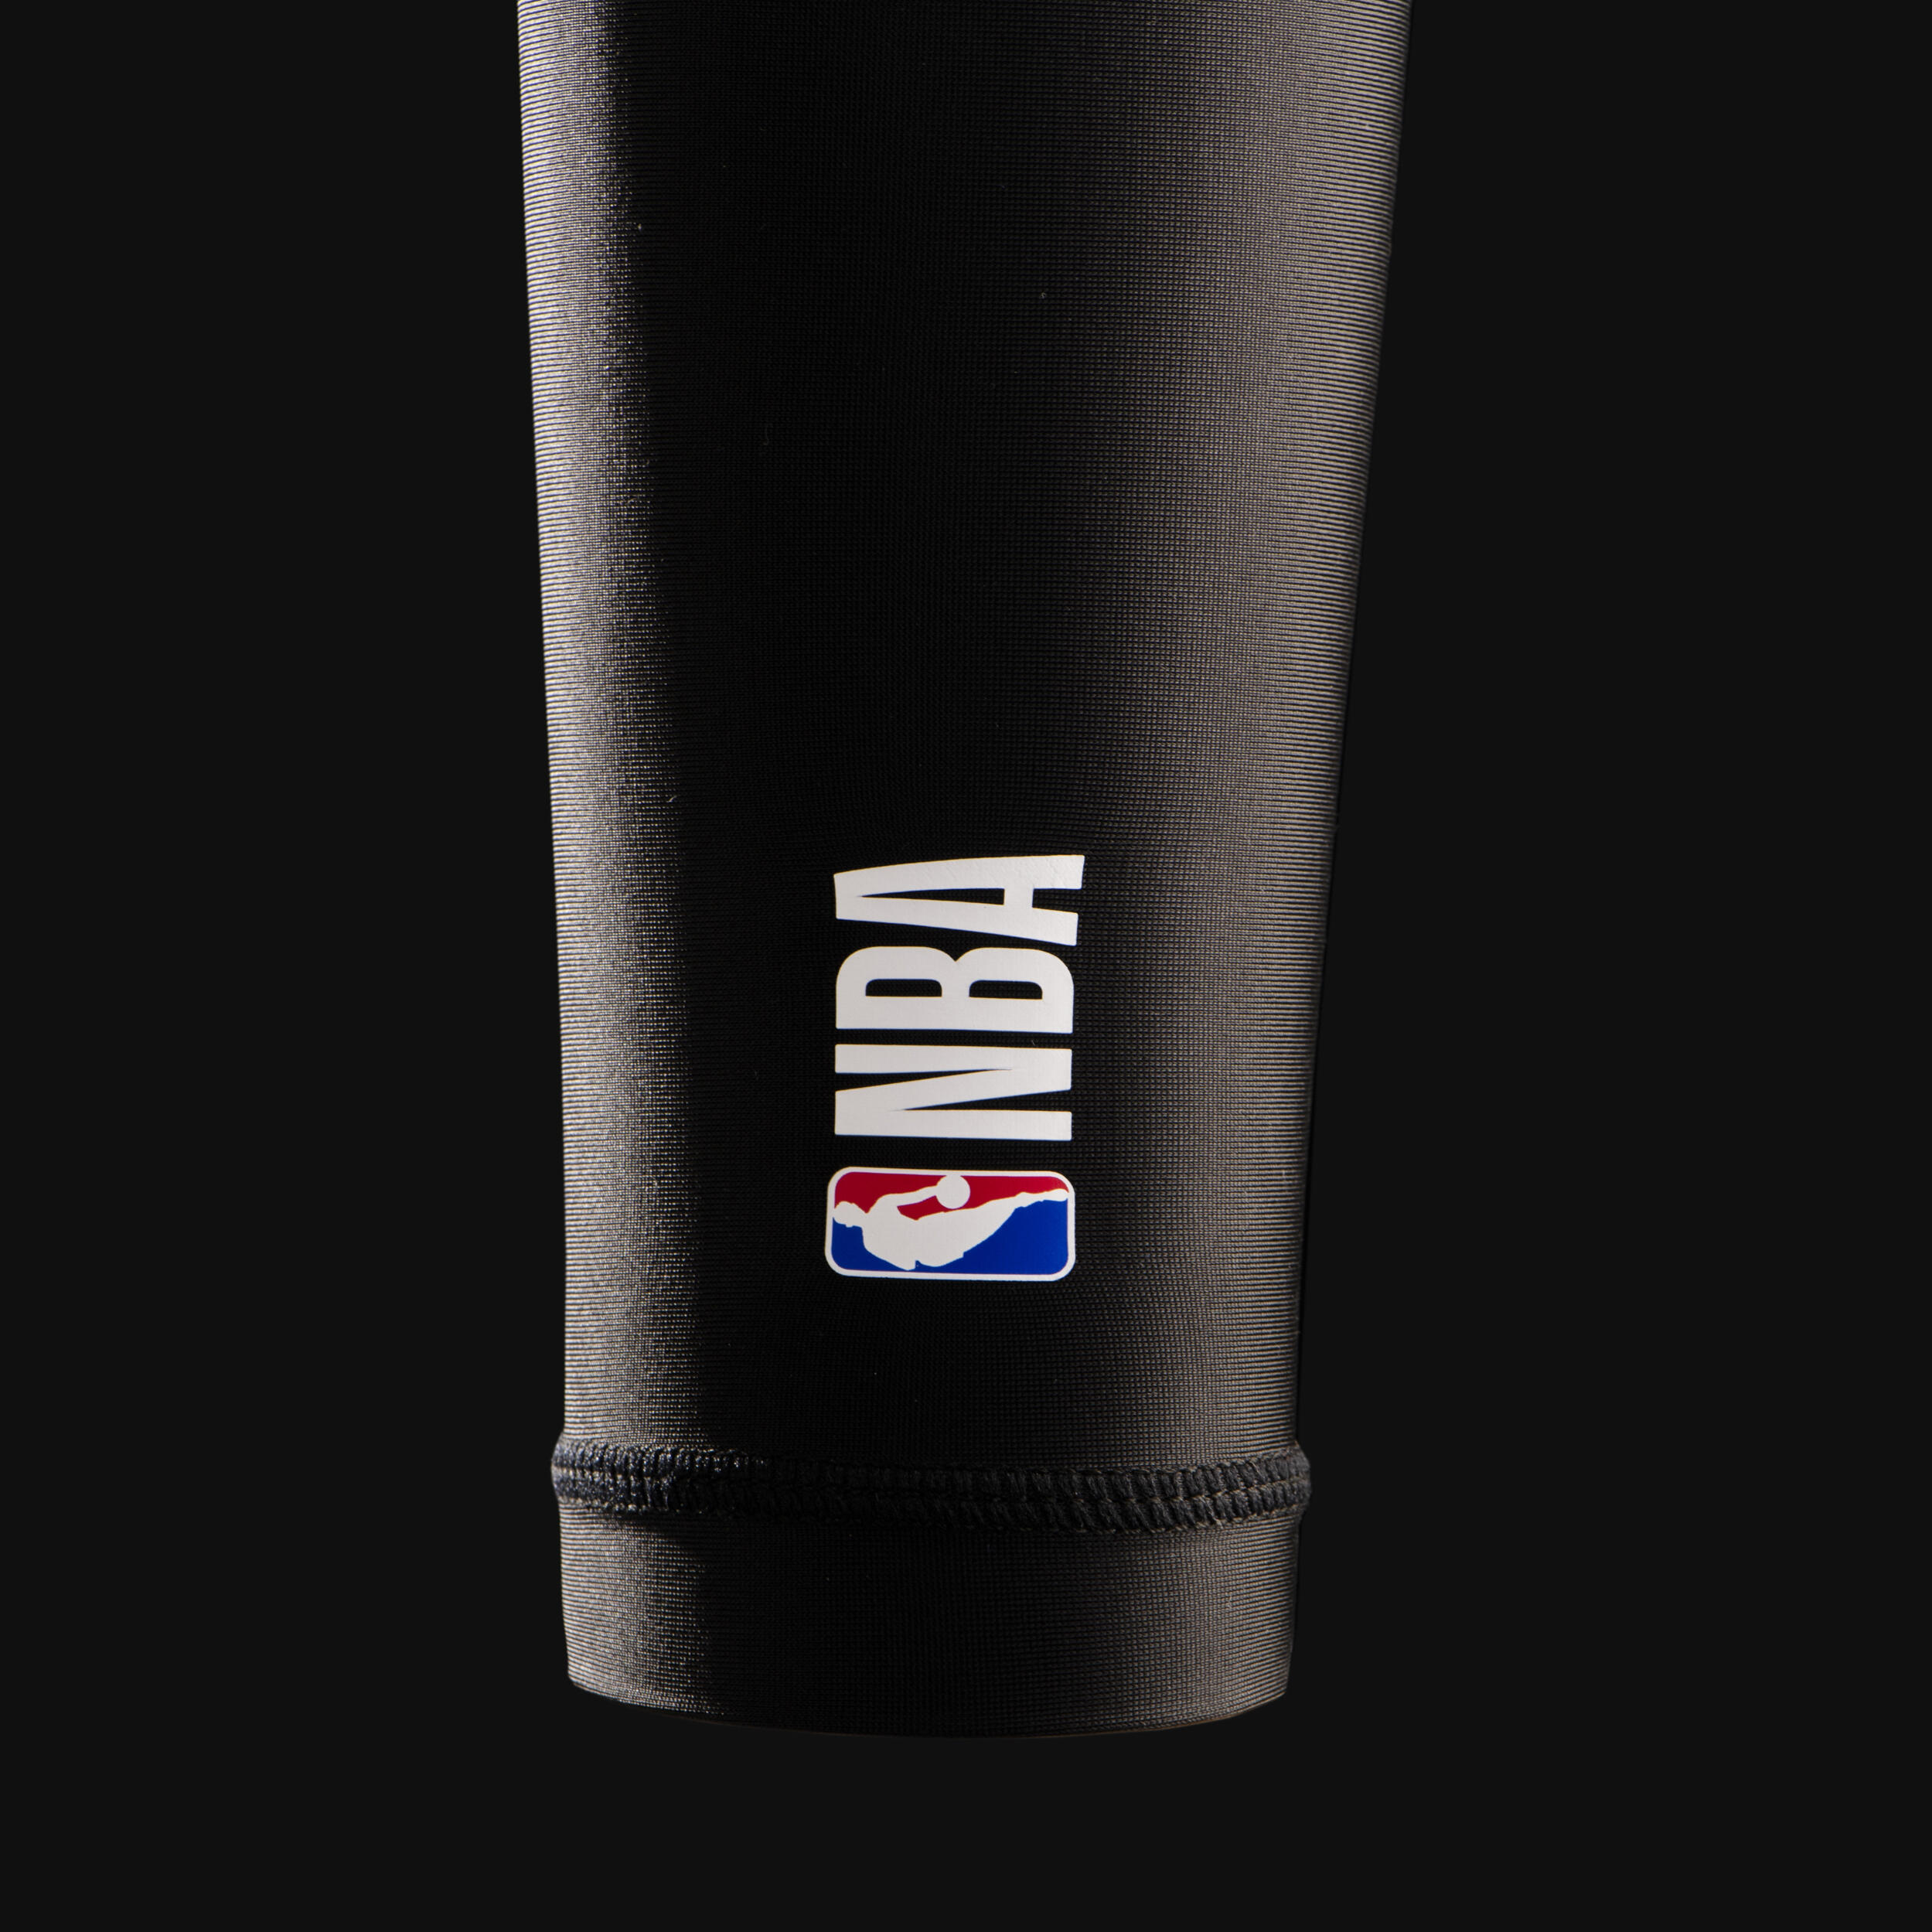 Buy Nike NBA Shooter Sleeve - Pair(Black/White, SM) Online at Low